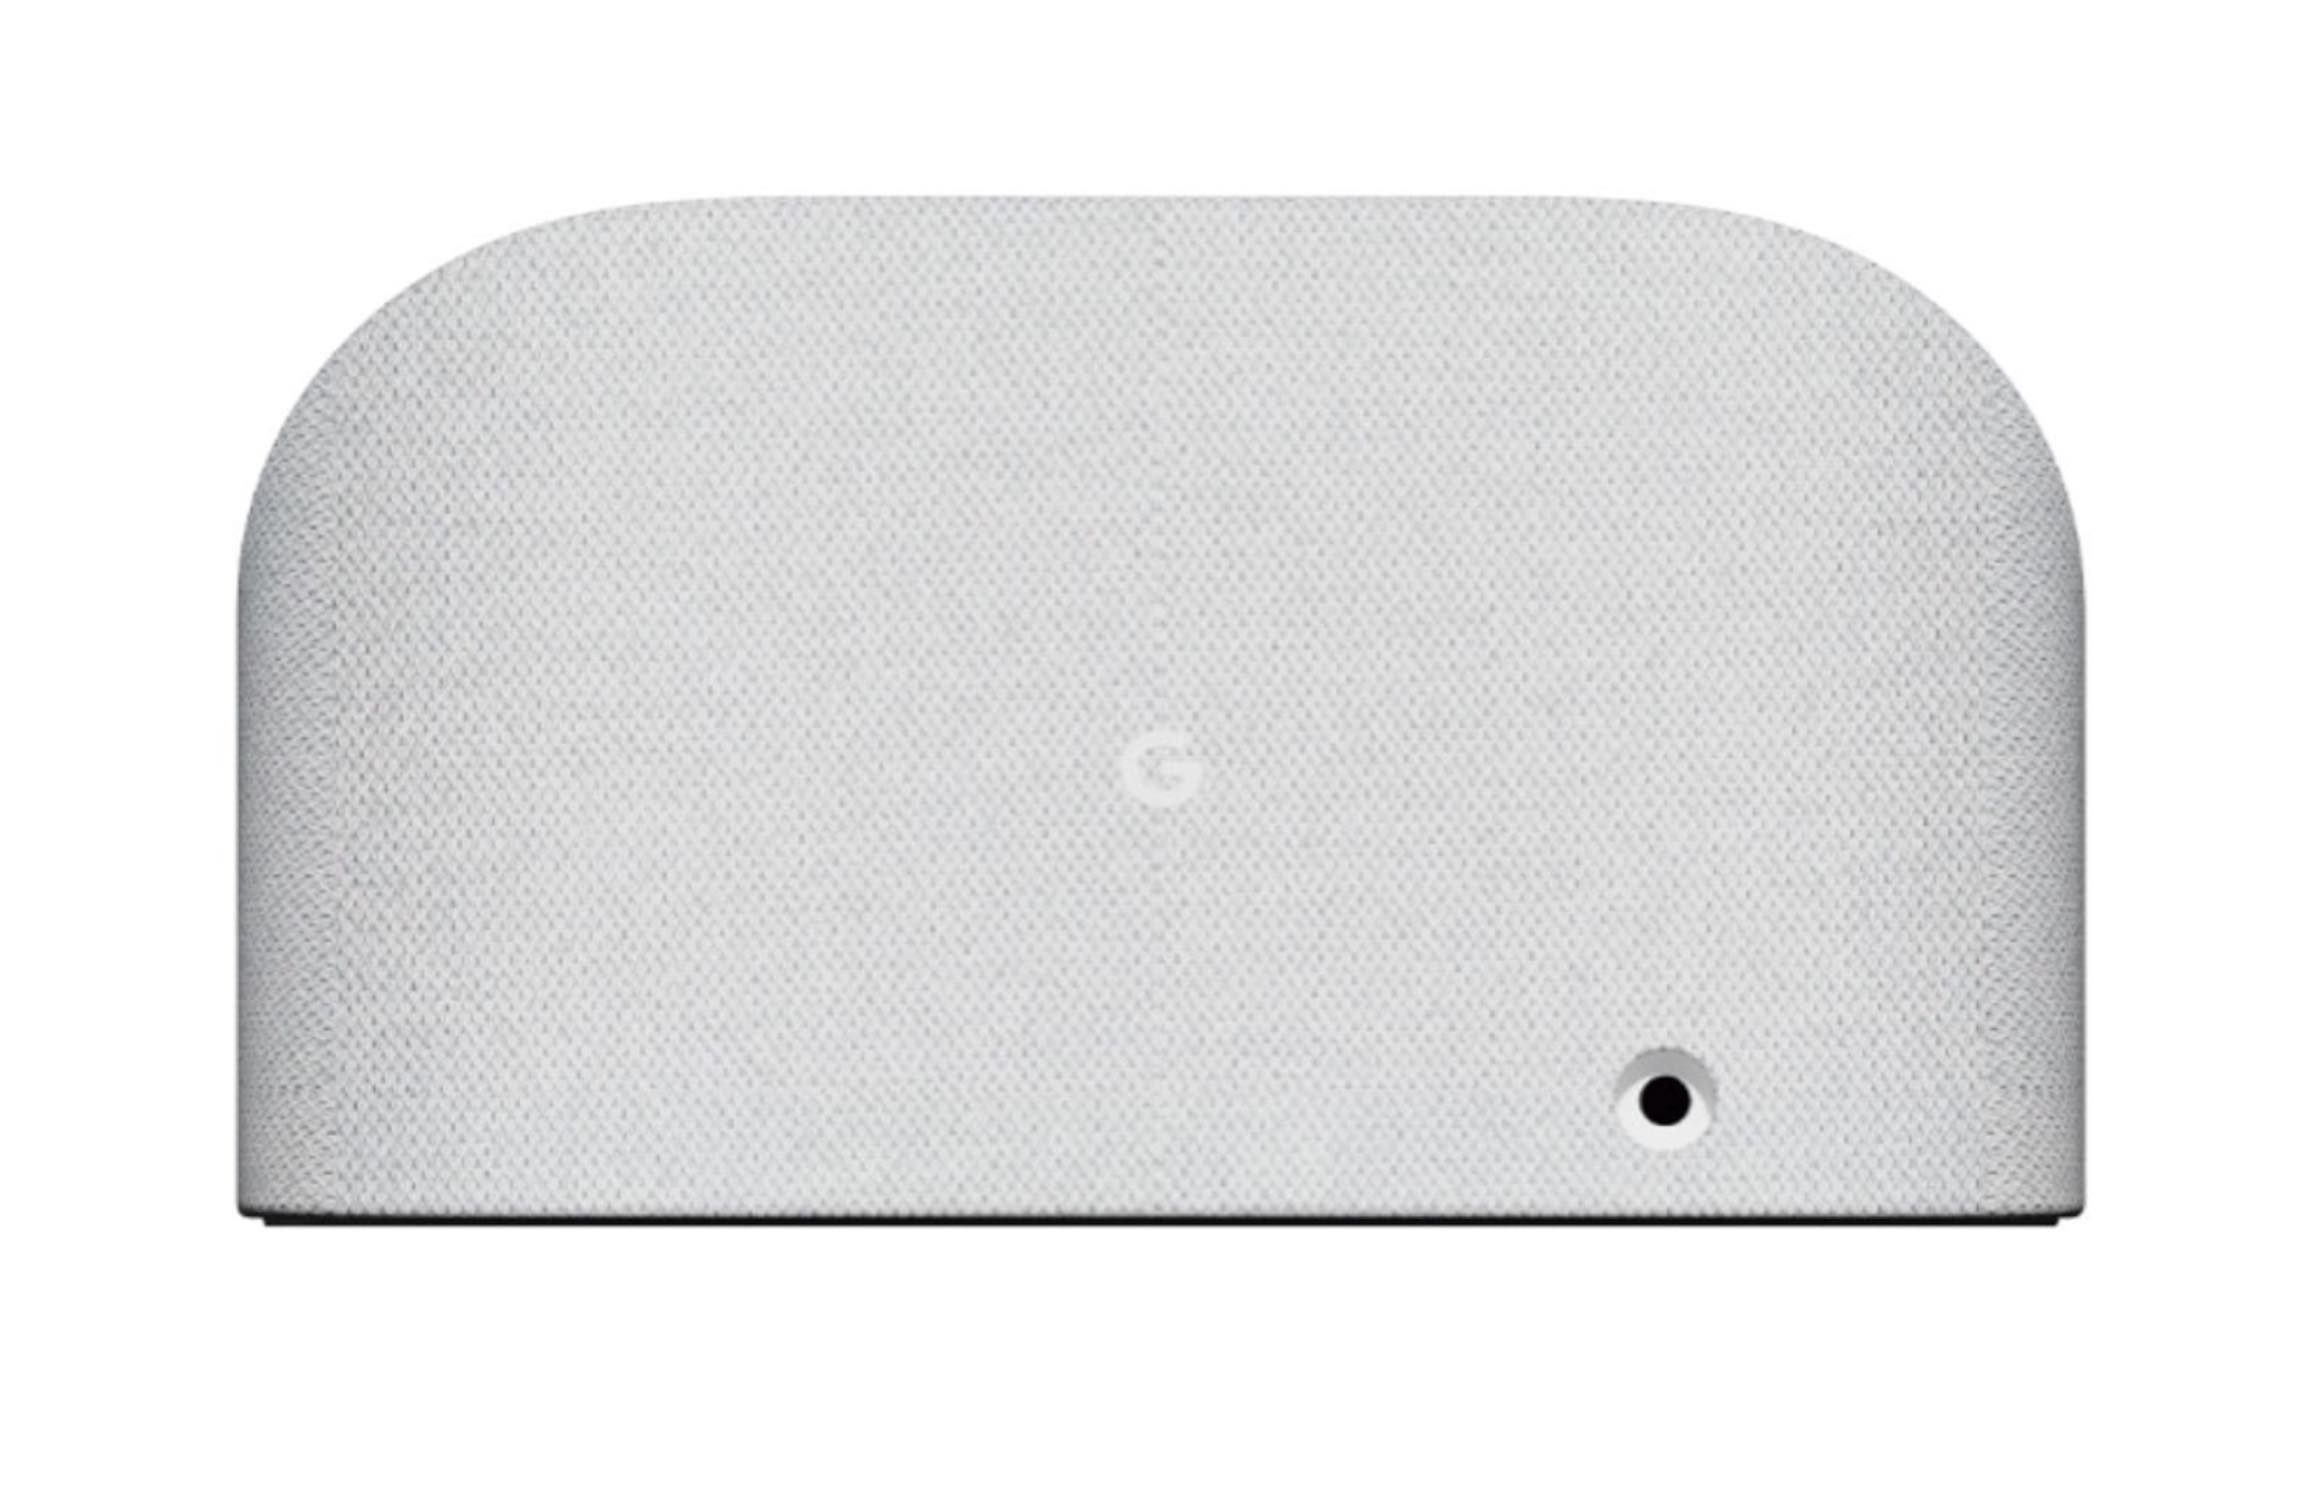 ｢Google Pixel Tablet｣の専用スタンドの新たな写真が流出